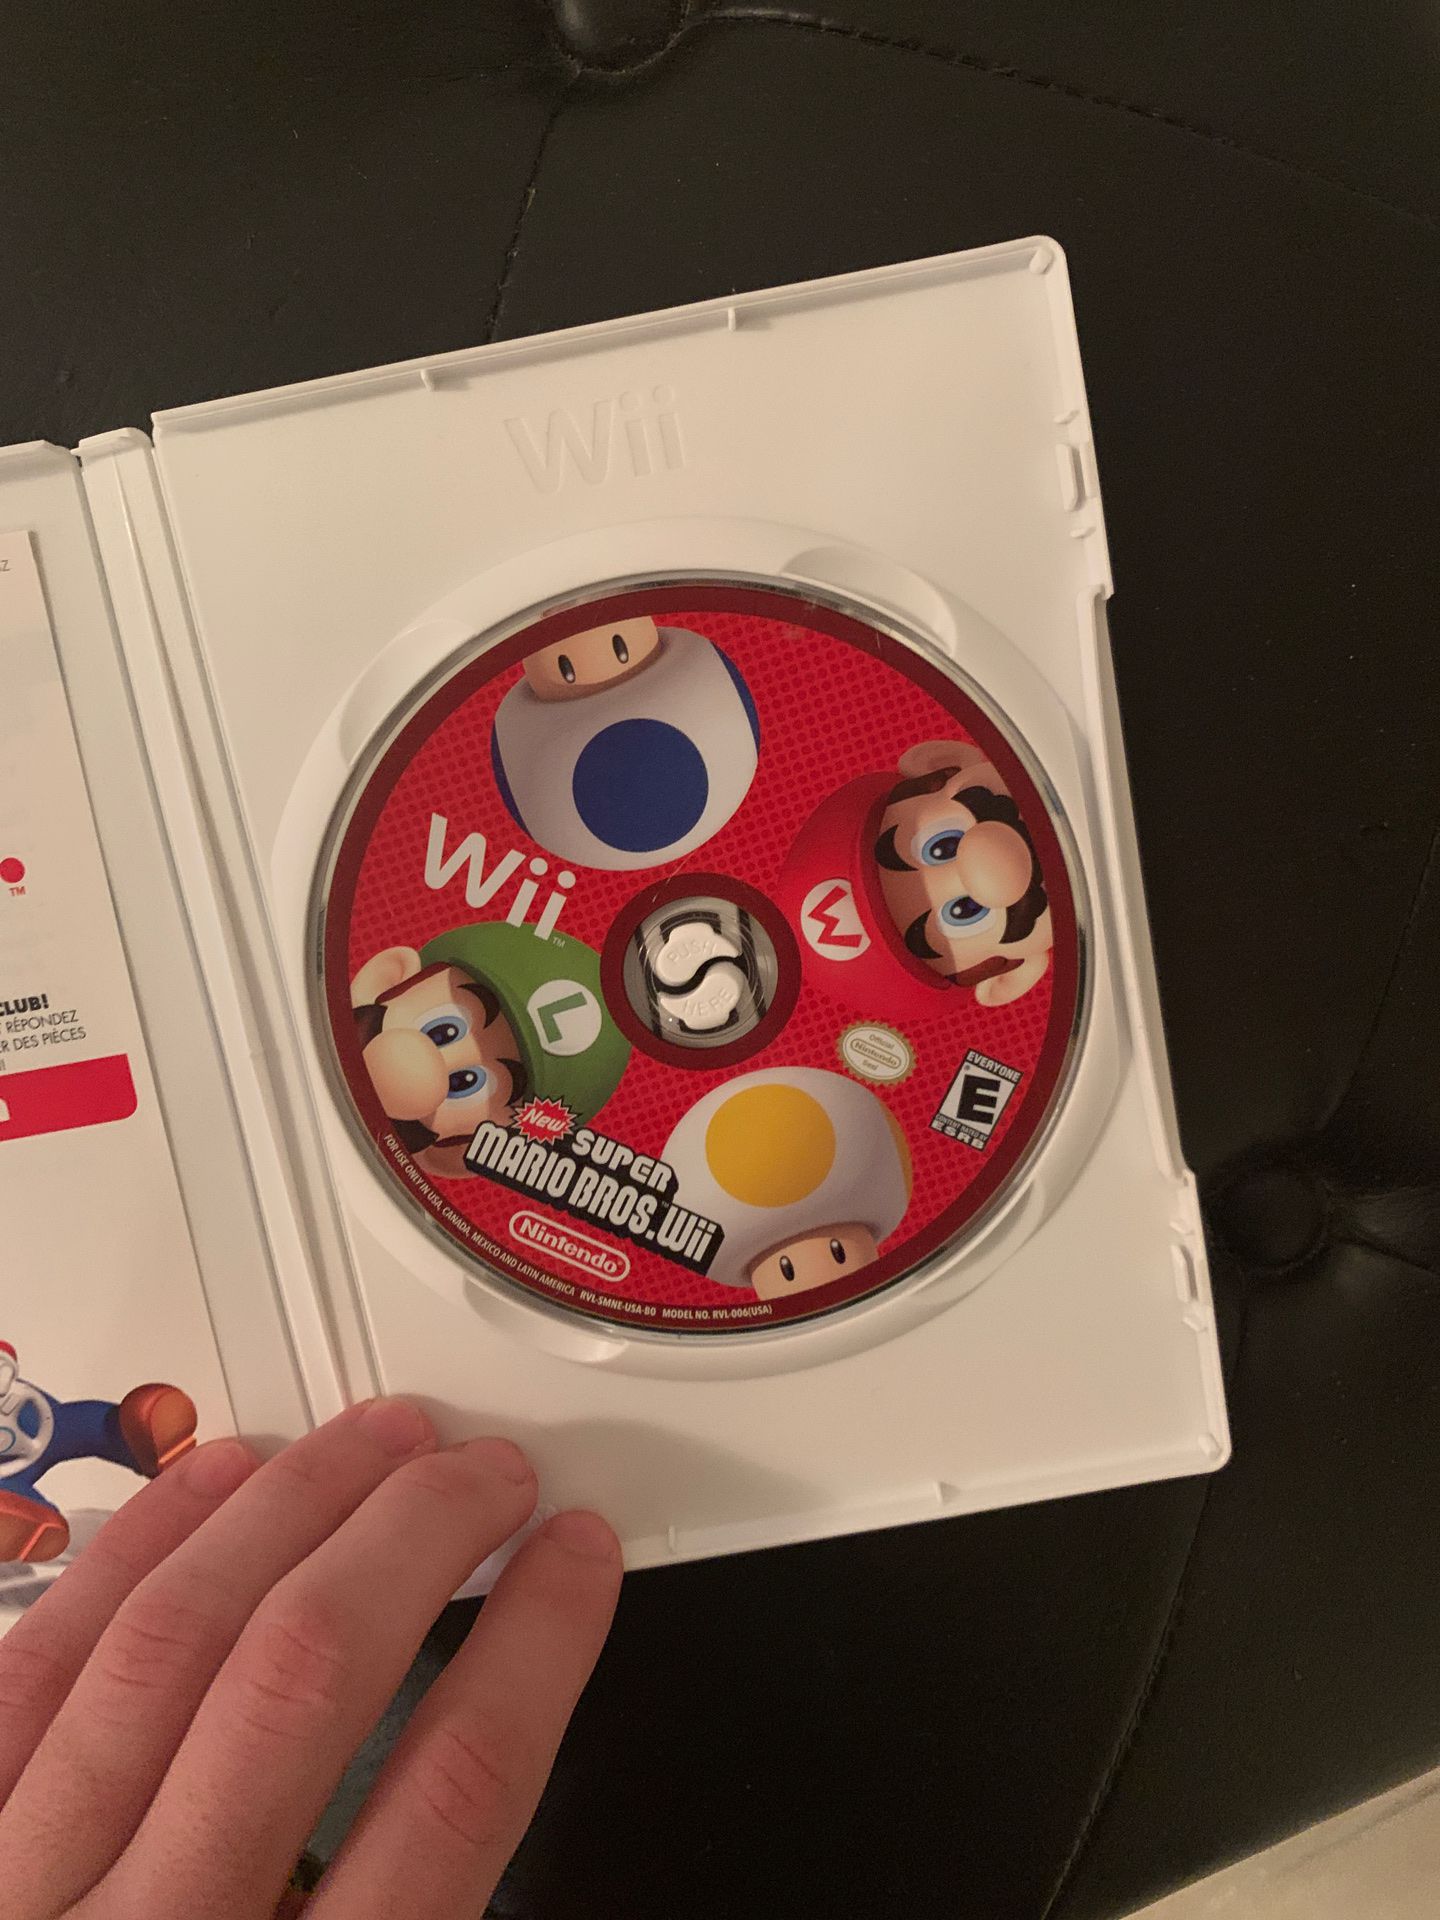 Super Mario bro’s Wii